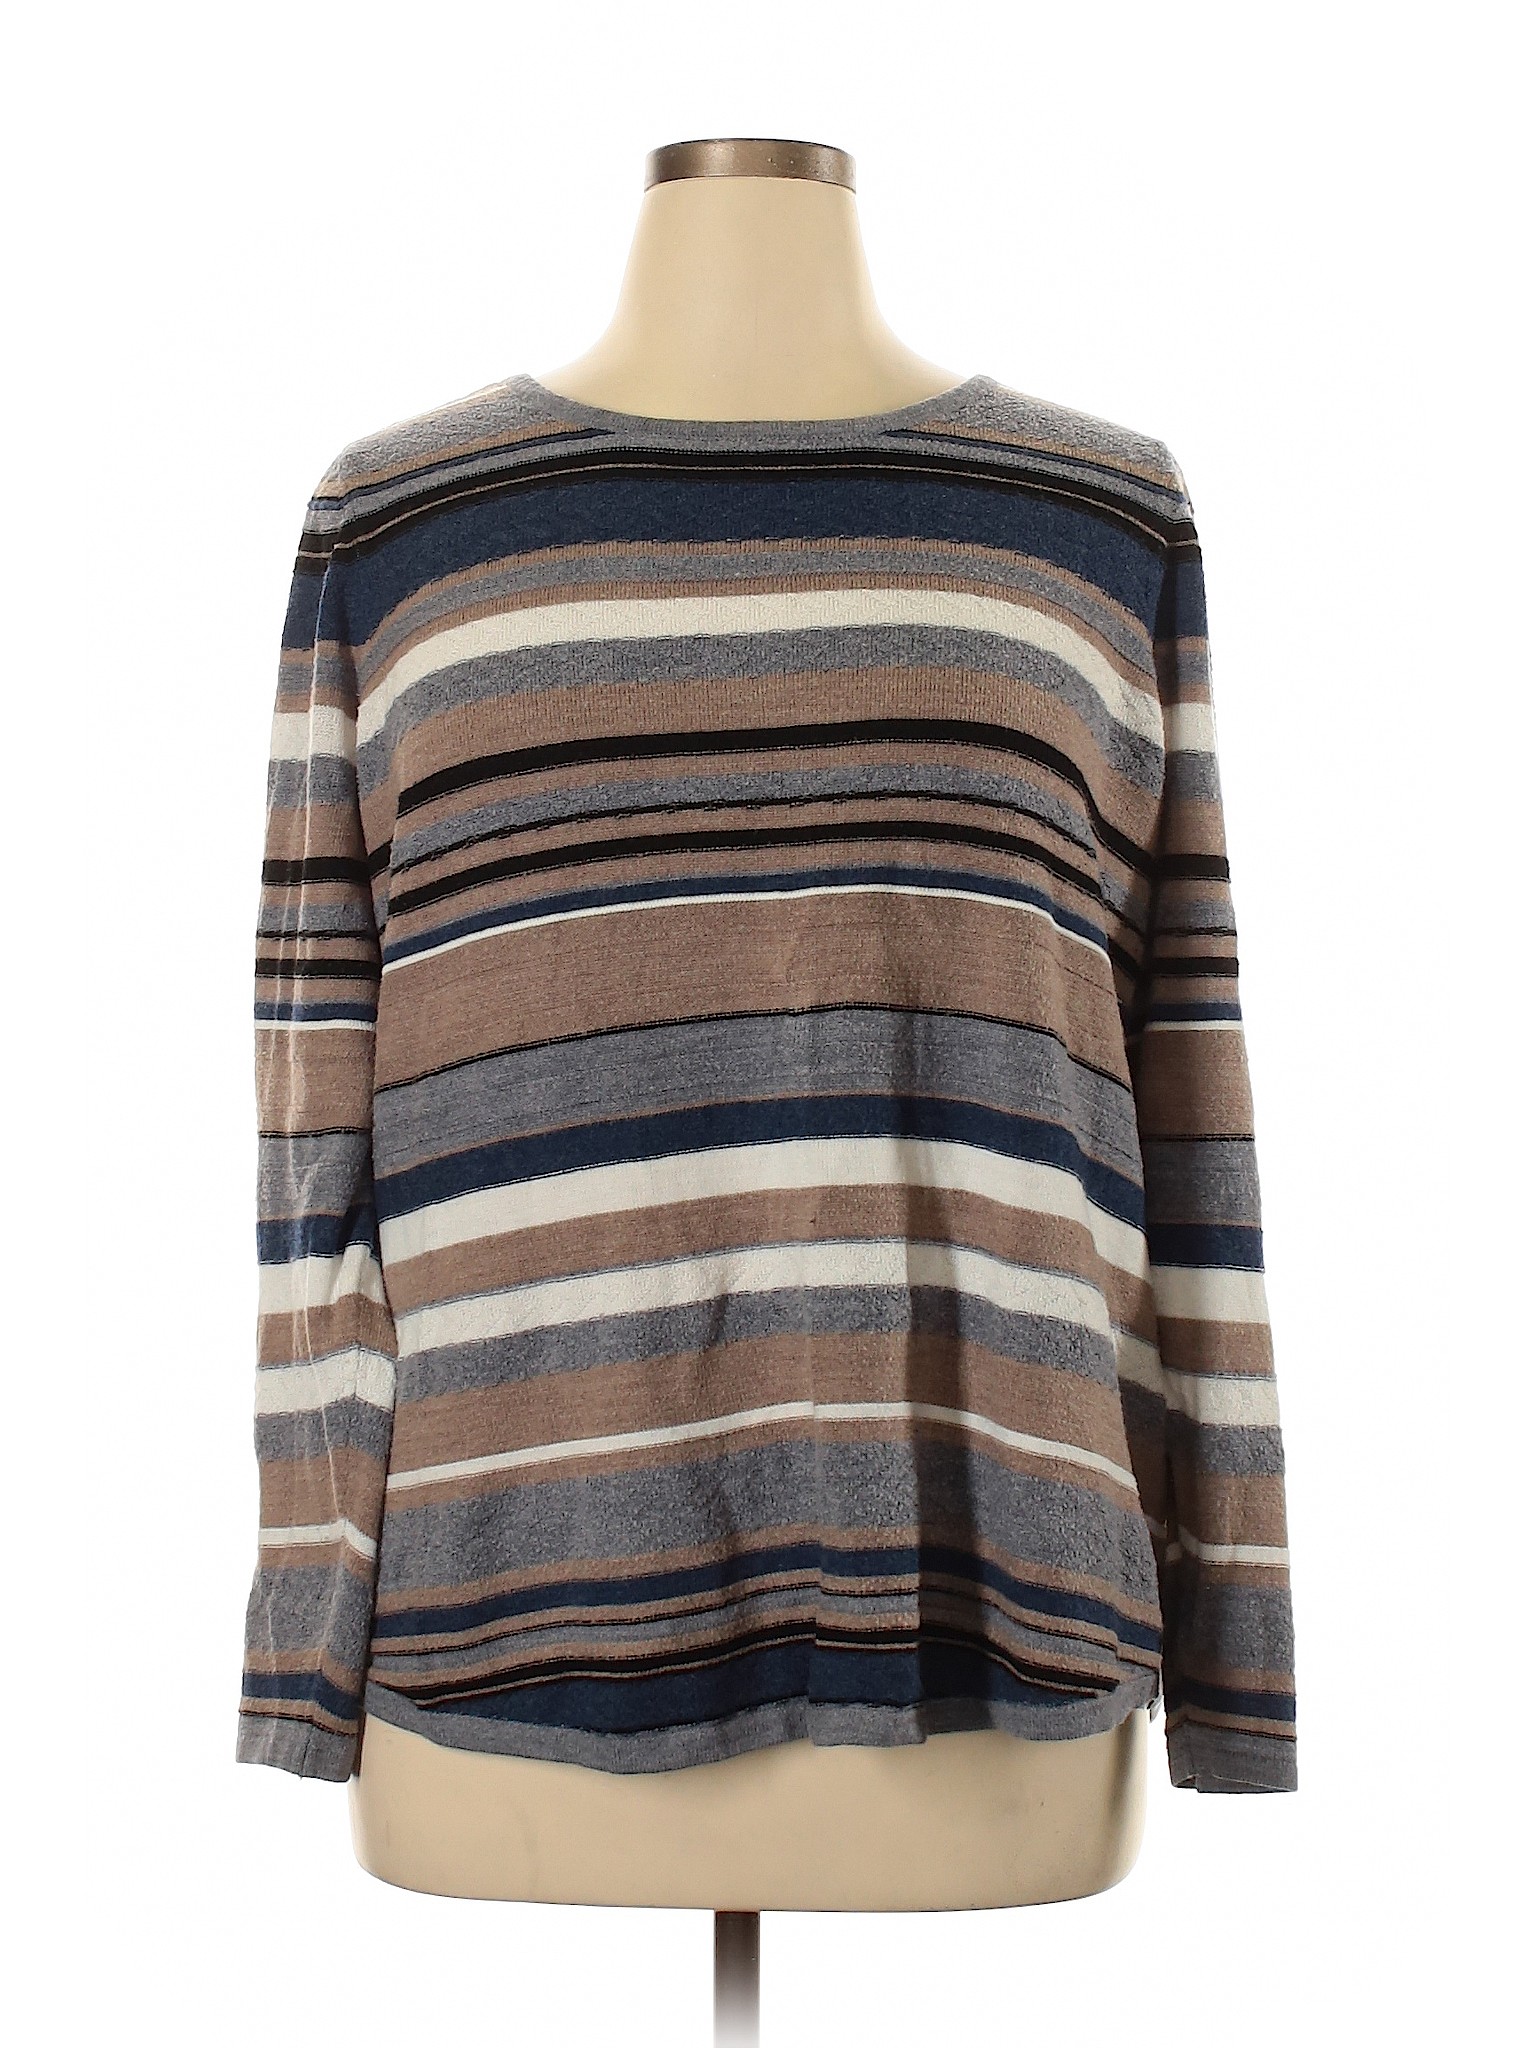 Croft & Barrow Women Brown Pullover Sweater 2X Plus | eBay